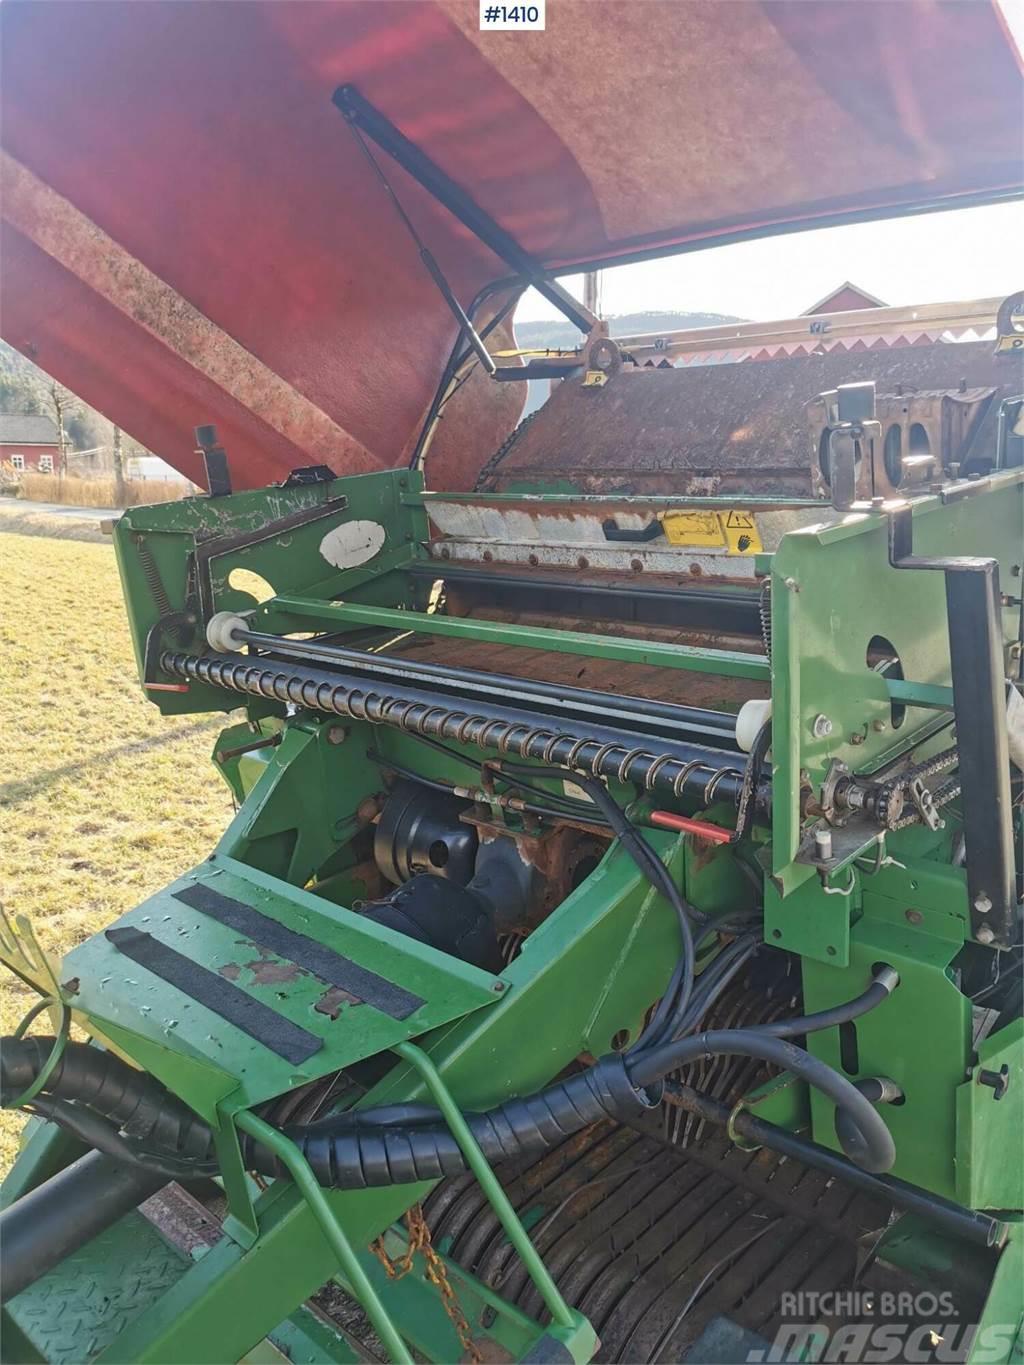 Orkel GP1260 Other forage harvesting equipment